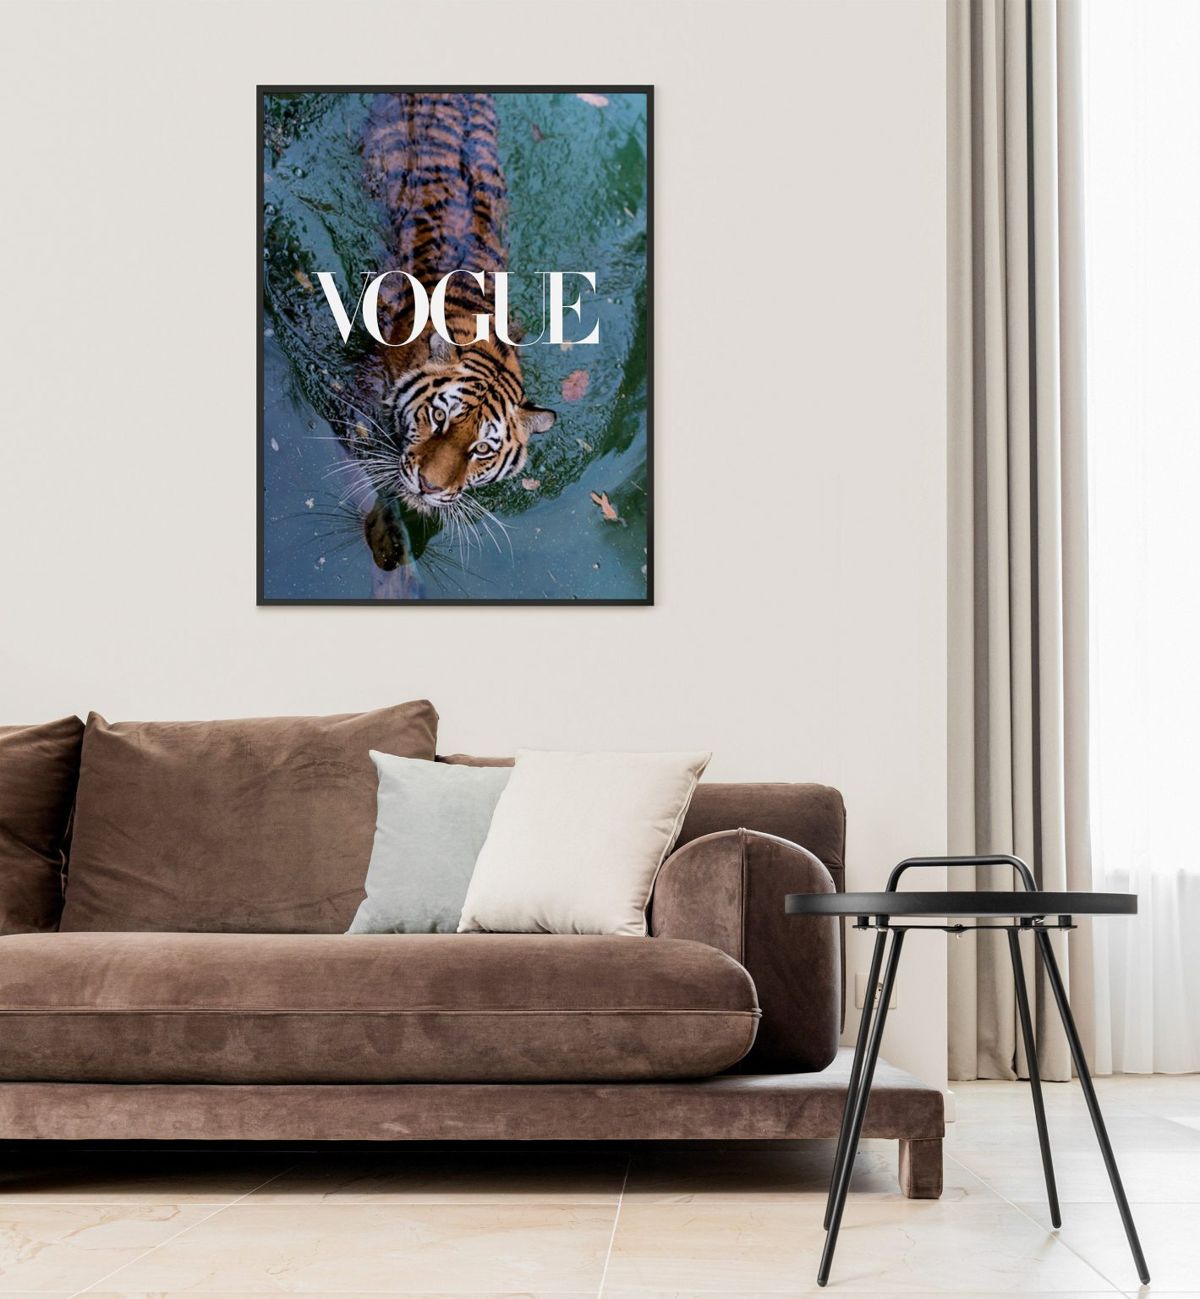 vogue magazine cover wall art